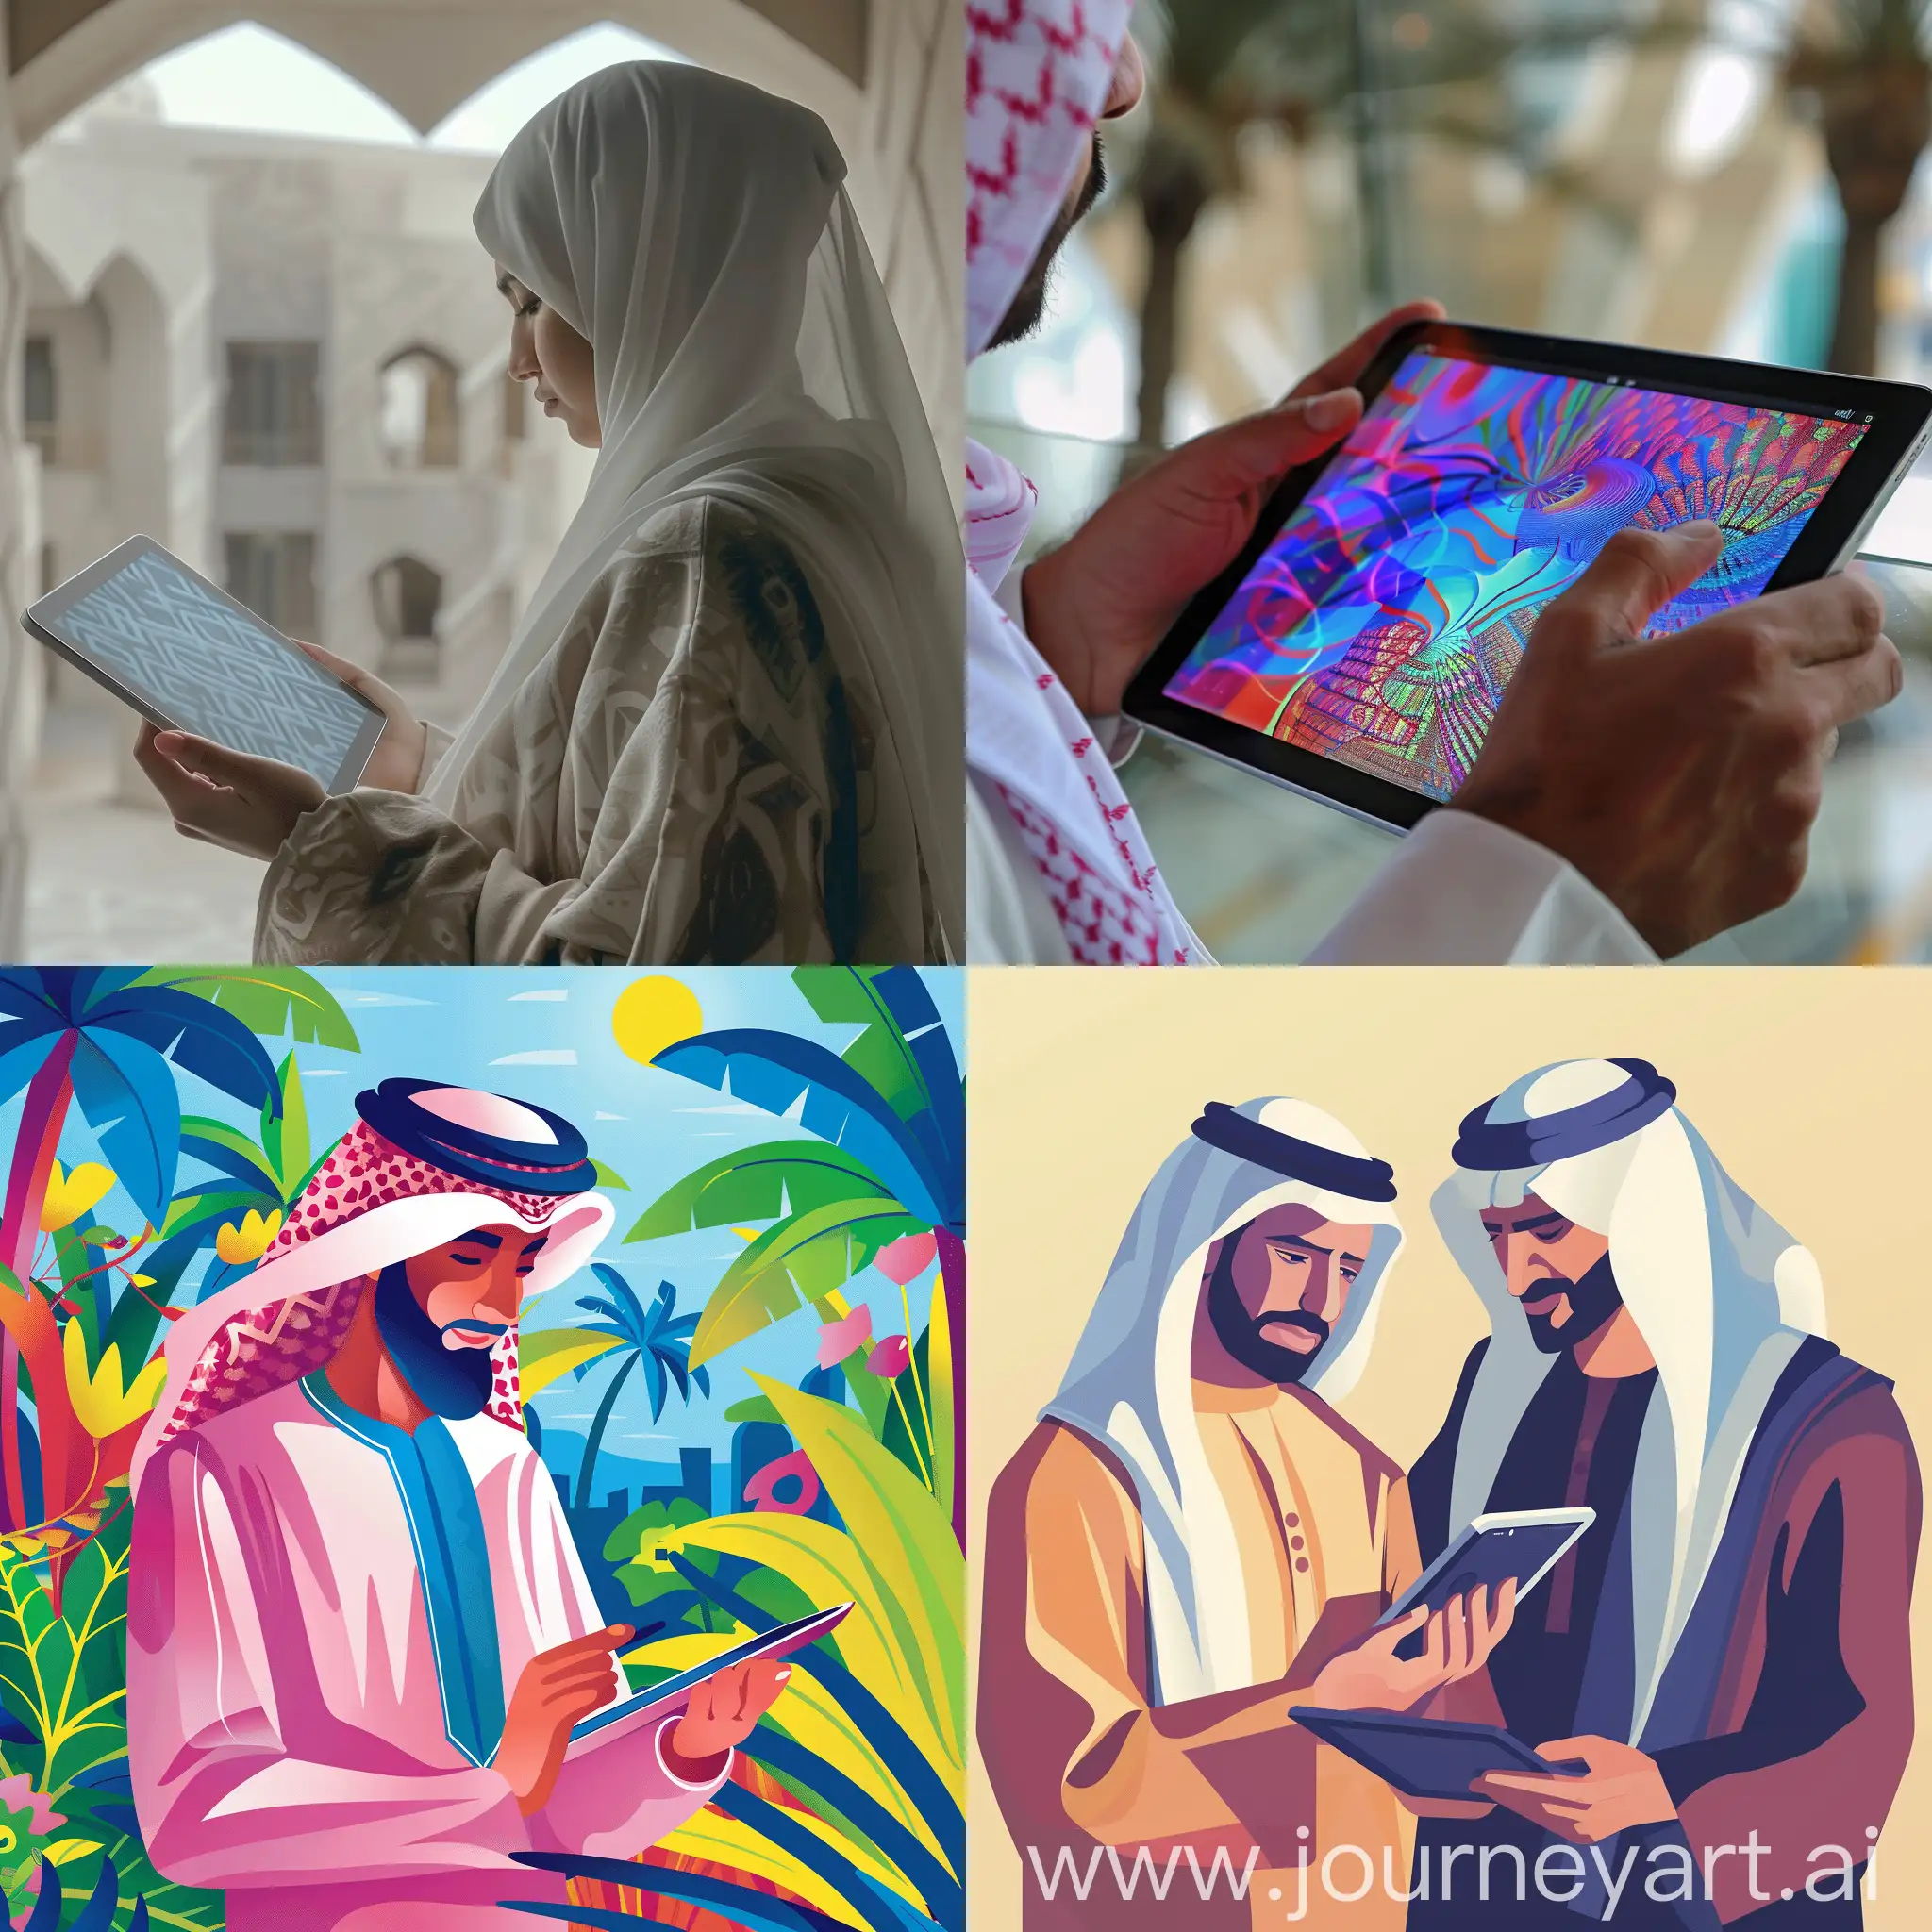 Qatari-Society-Embracing-Digital-Creativity-on-Tablets